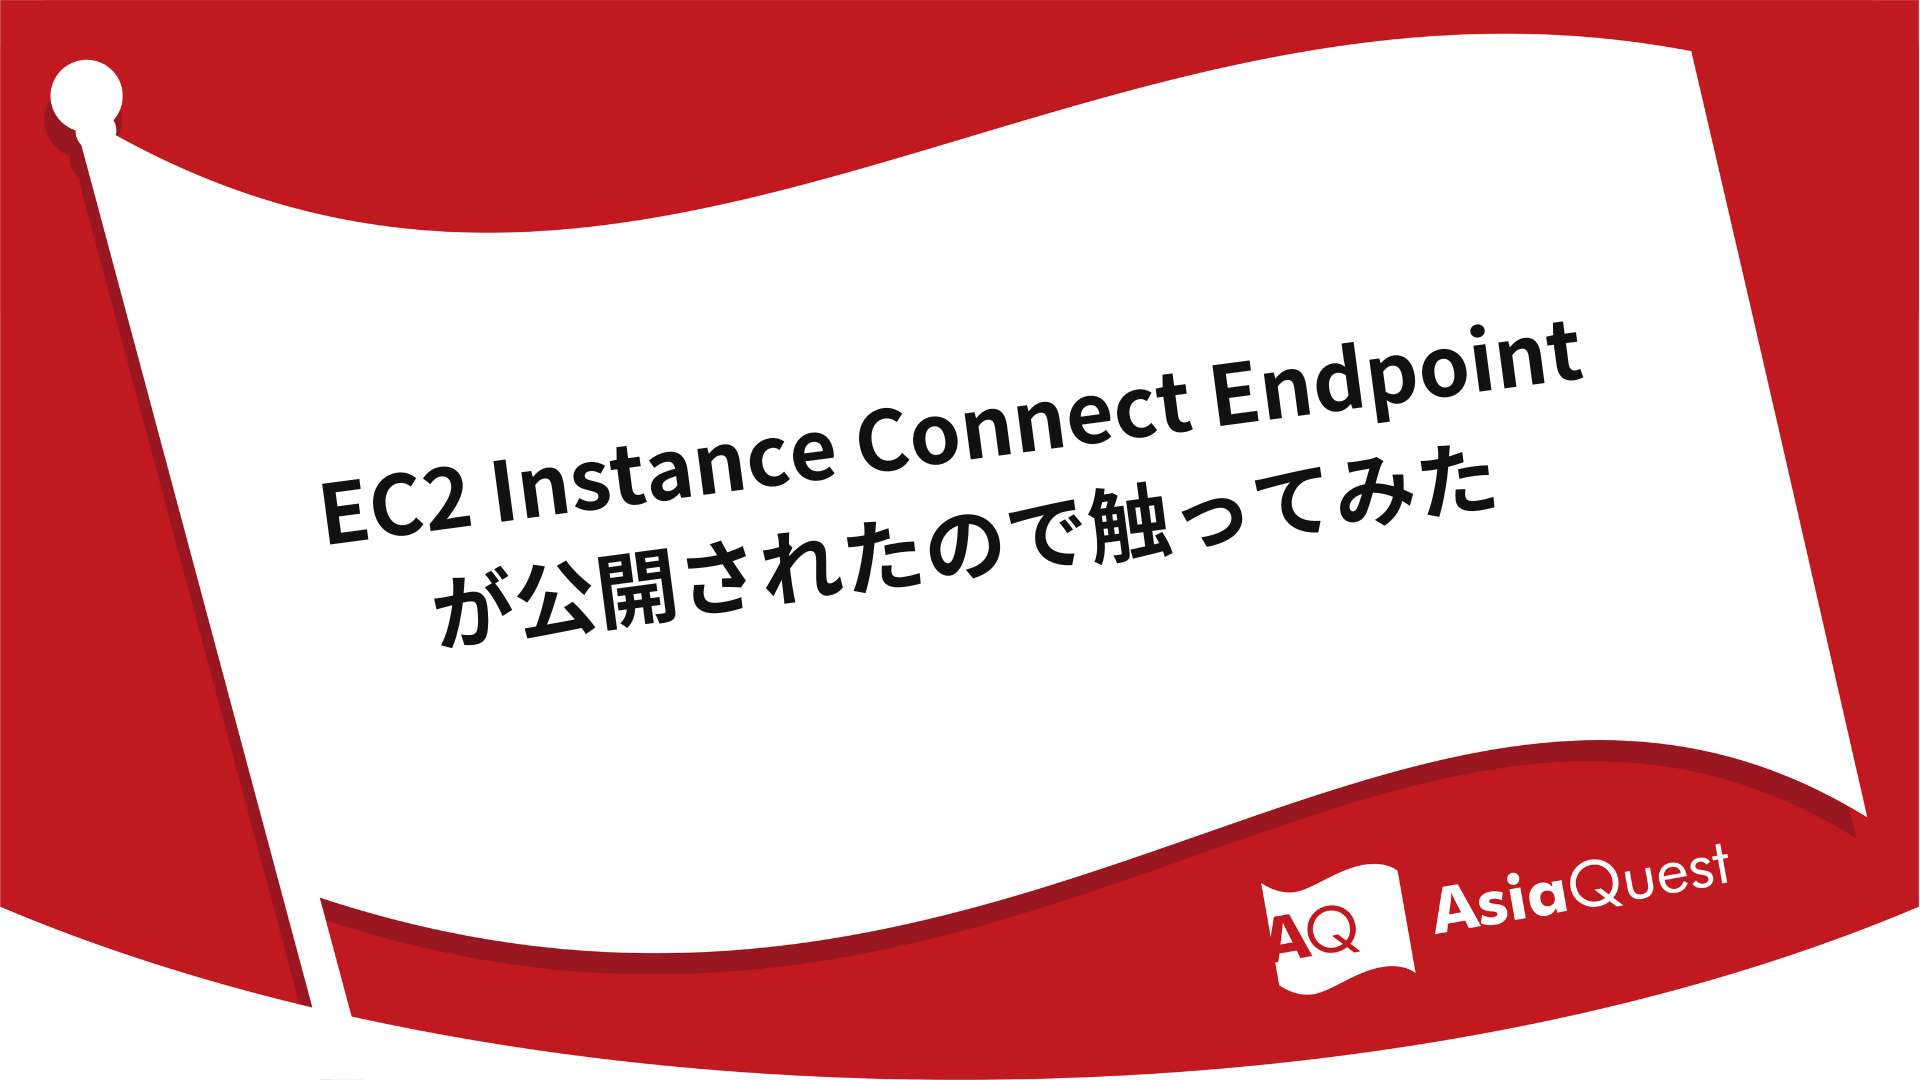 EC2 Instance Connect Endpointが公開されたので触ってみた